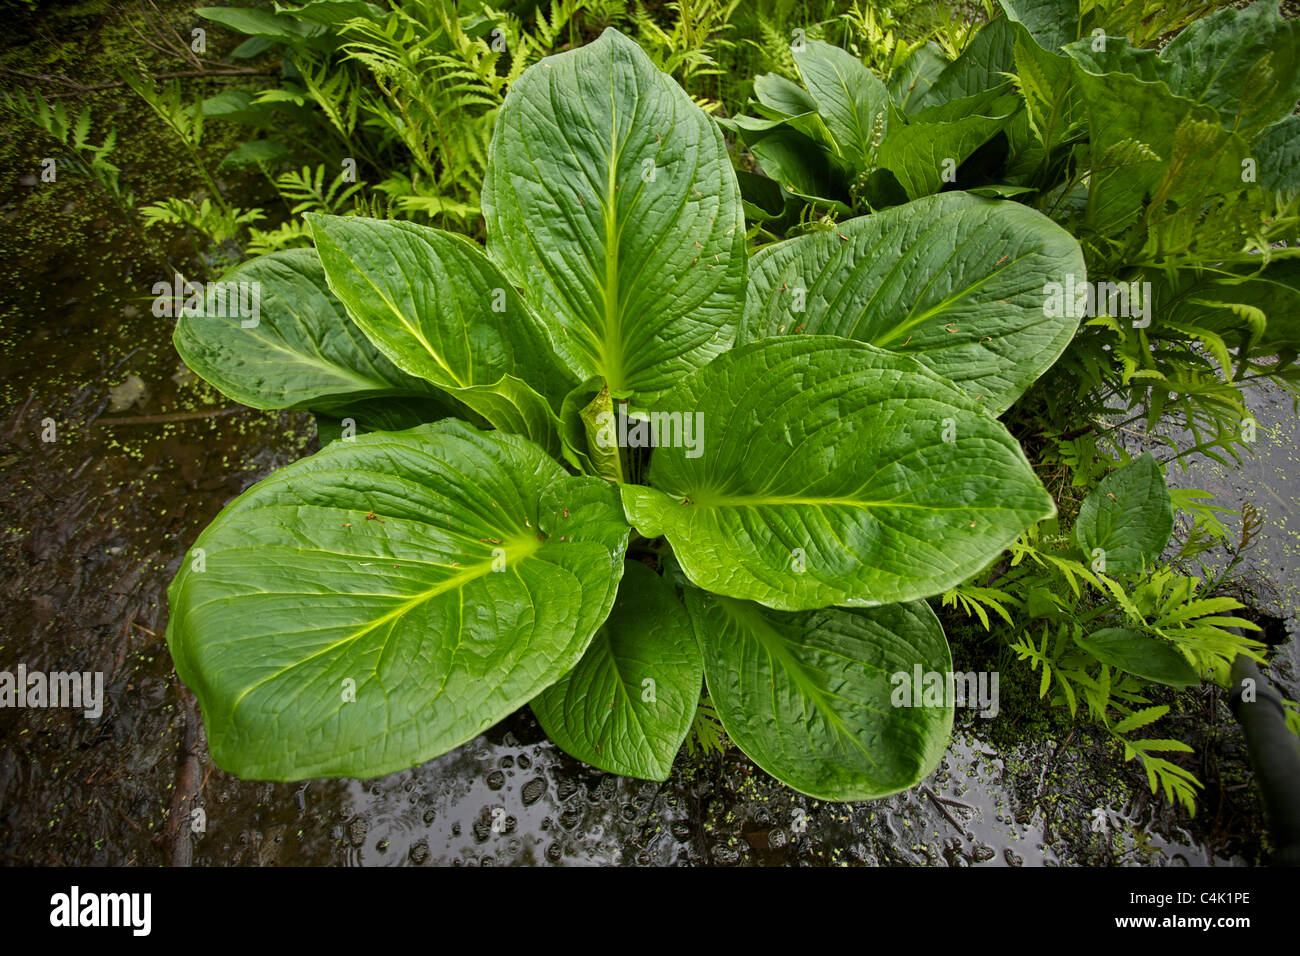 Eastern Skunk cabbage - (Symplocarpus foetidus), New York - Found in eastern North America - Grows in wet areas Stock Photo